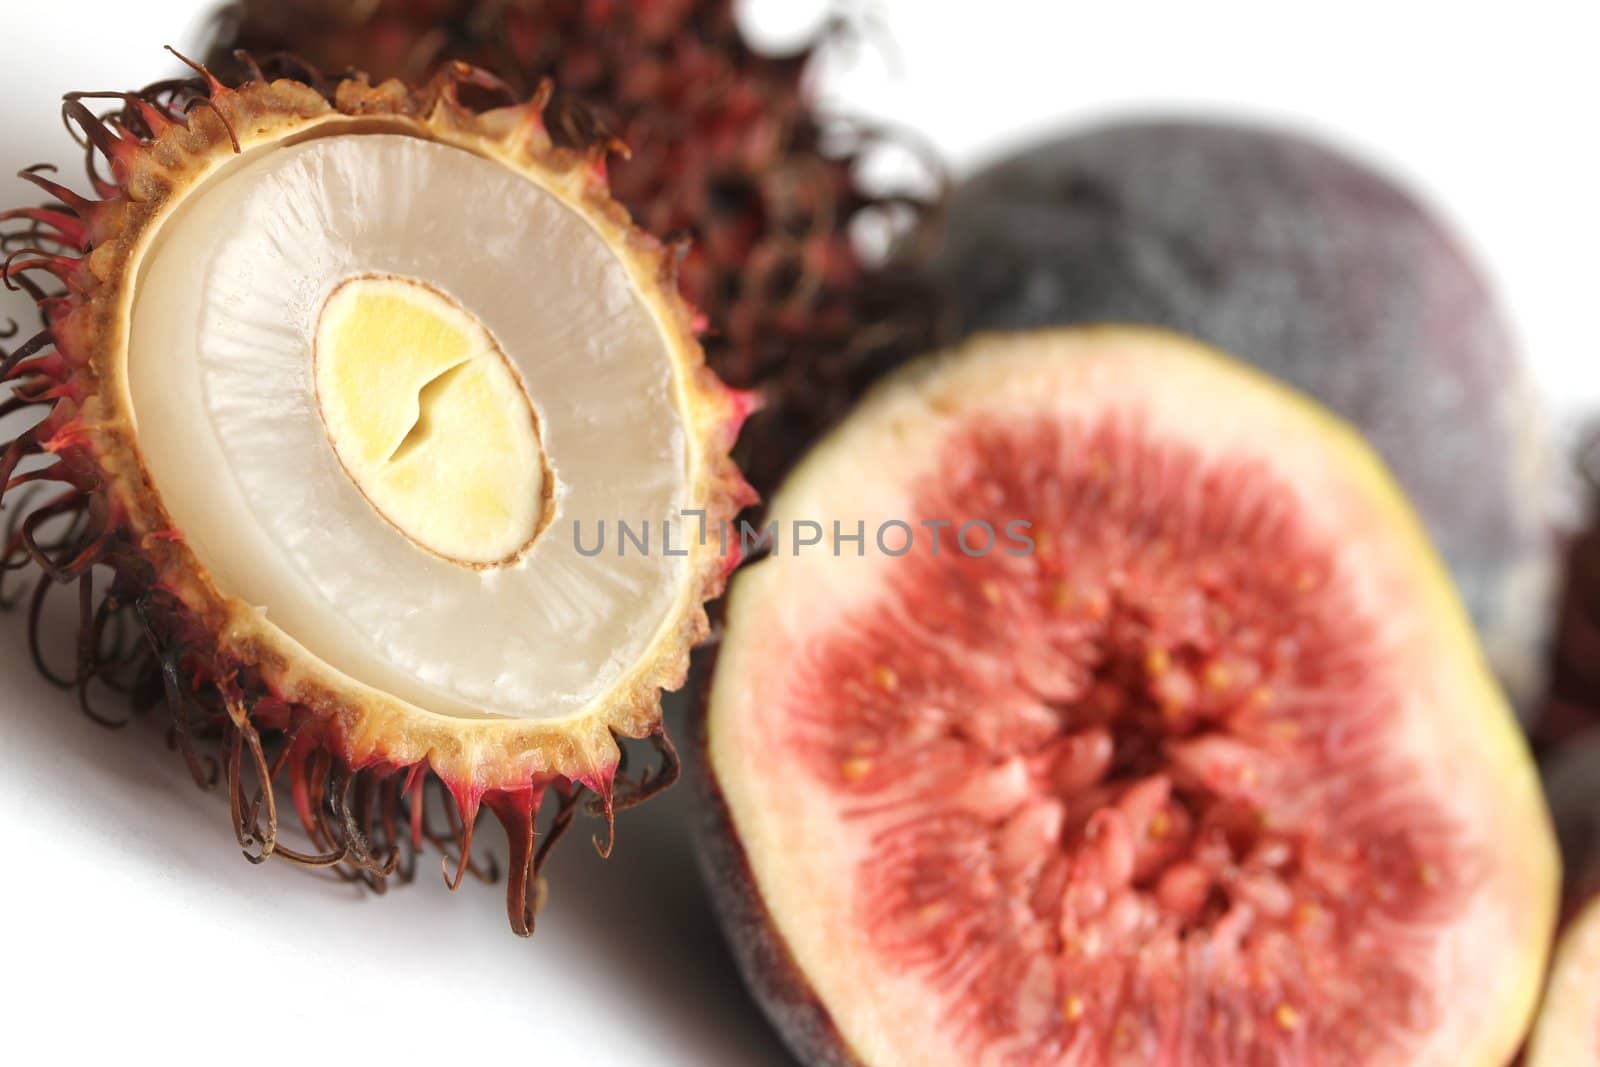 exotic fruits compilation: rambutan and fig